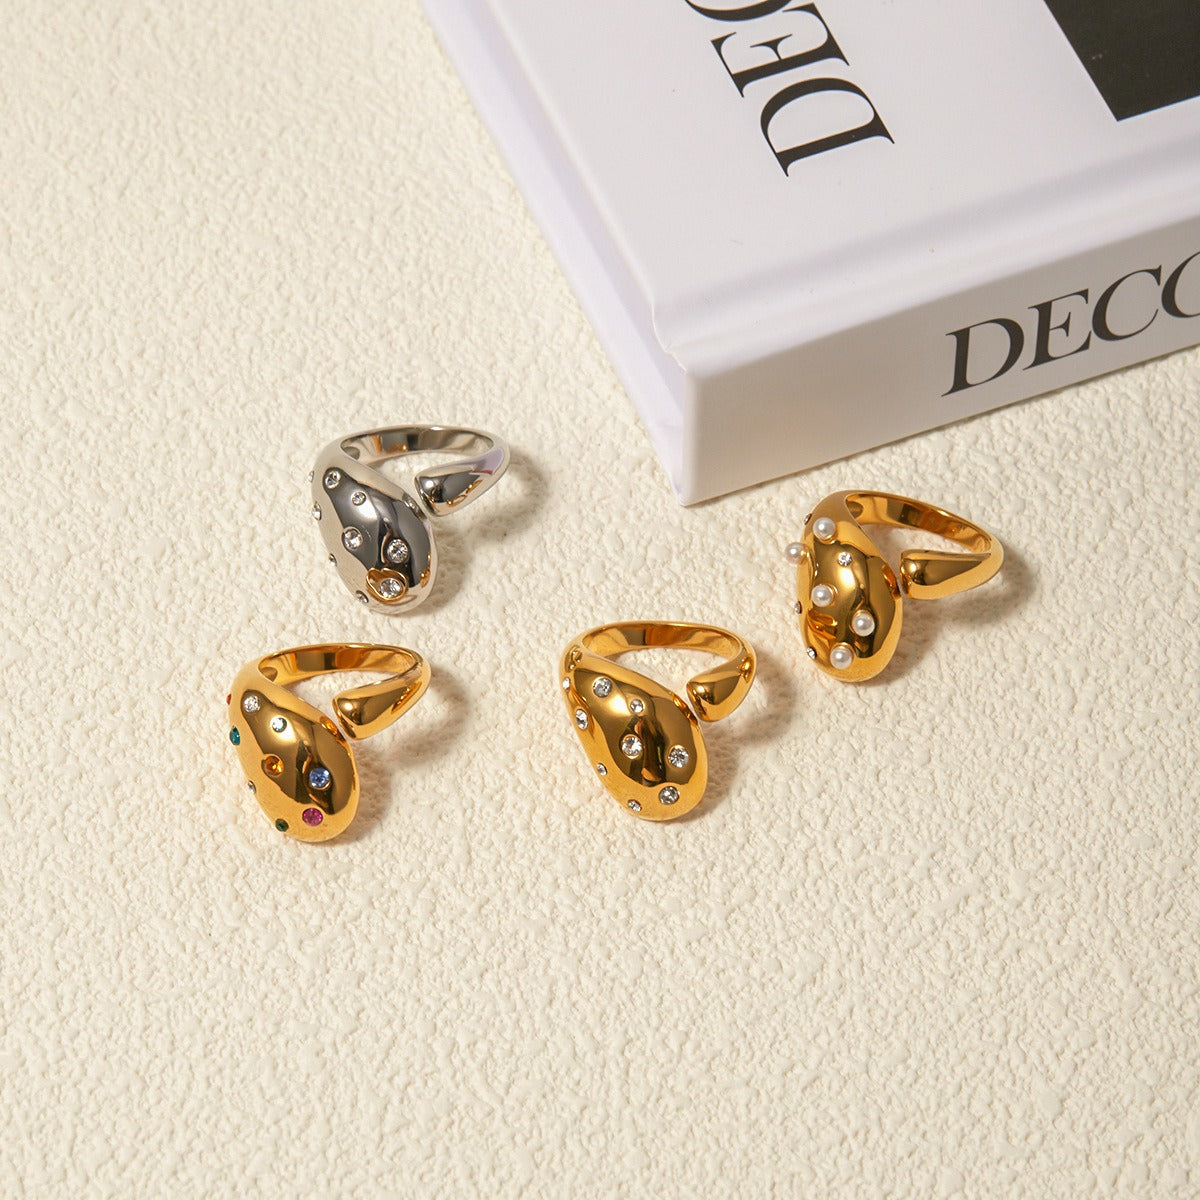 18K gold noble geometric diamond design open ring - SAOROPHO